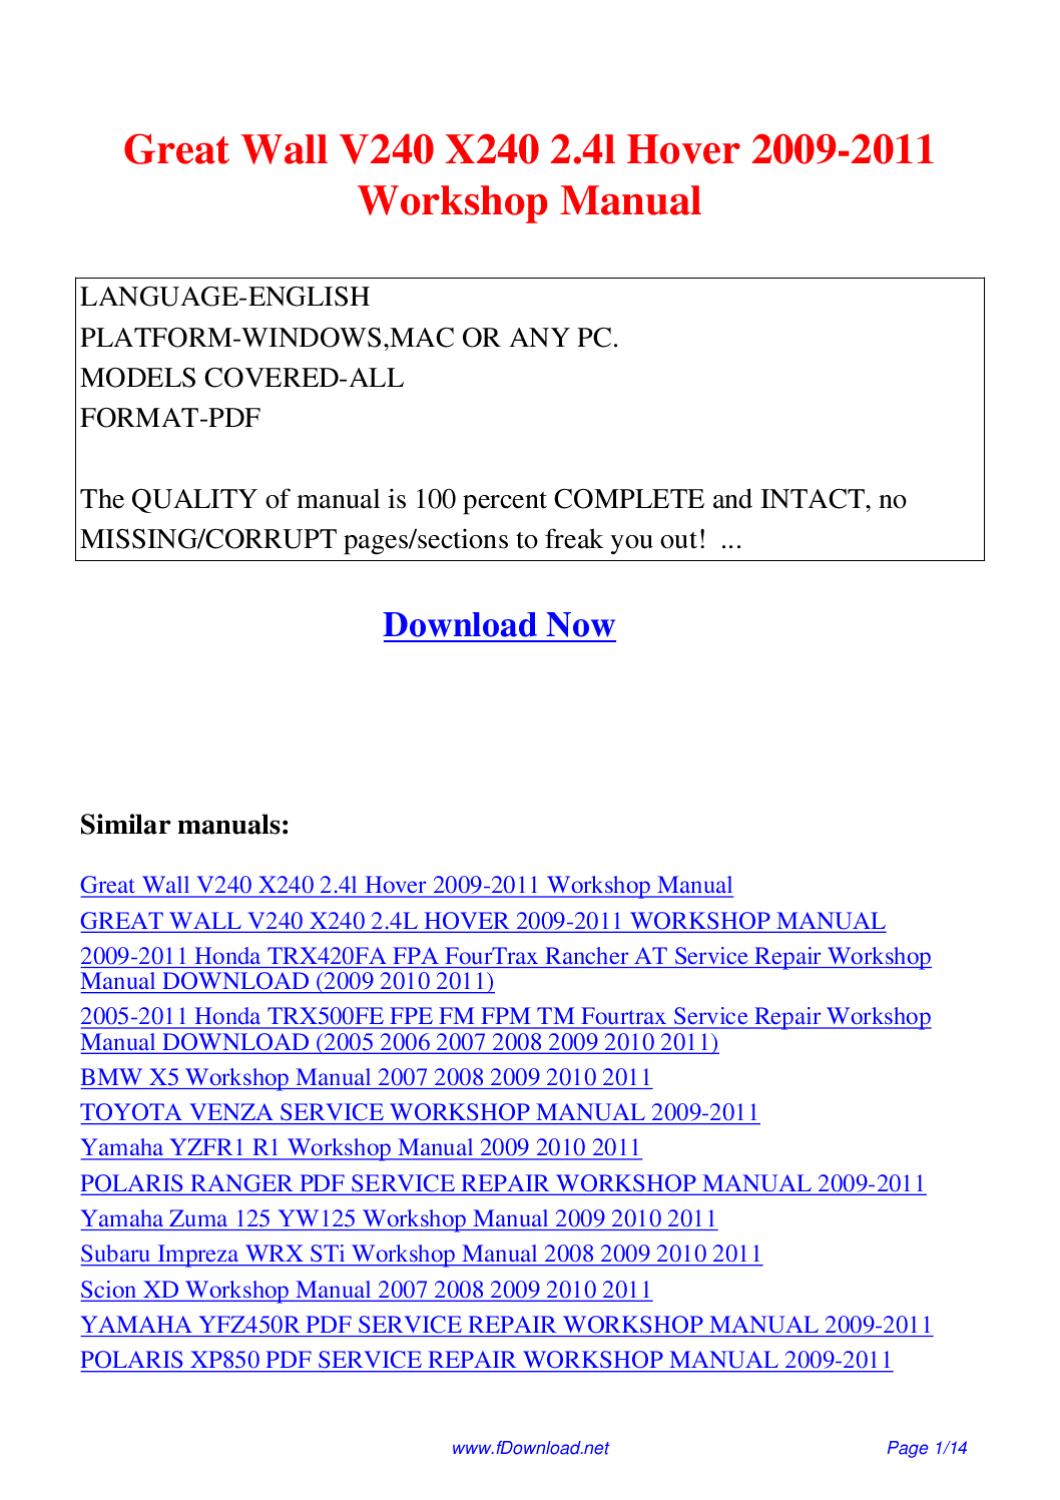 2007 bmw x5 manual pdf